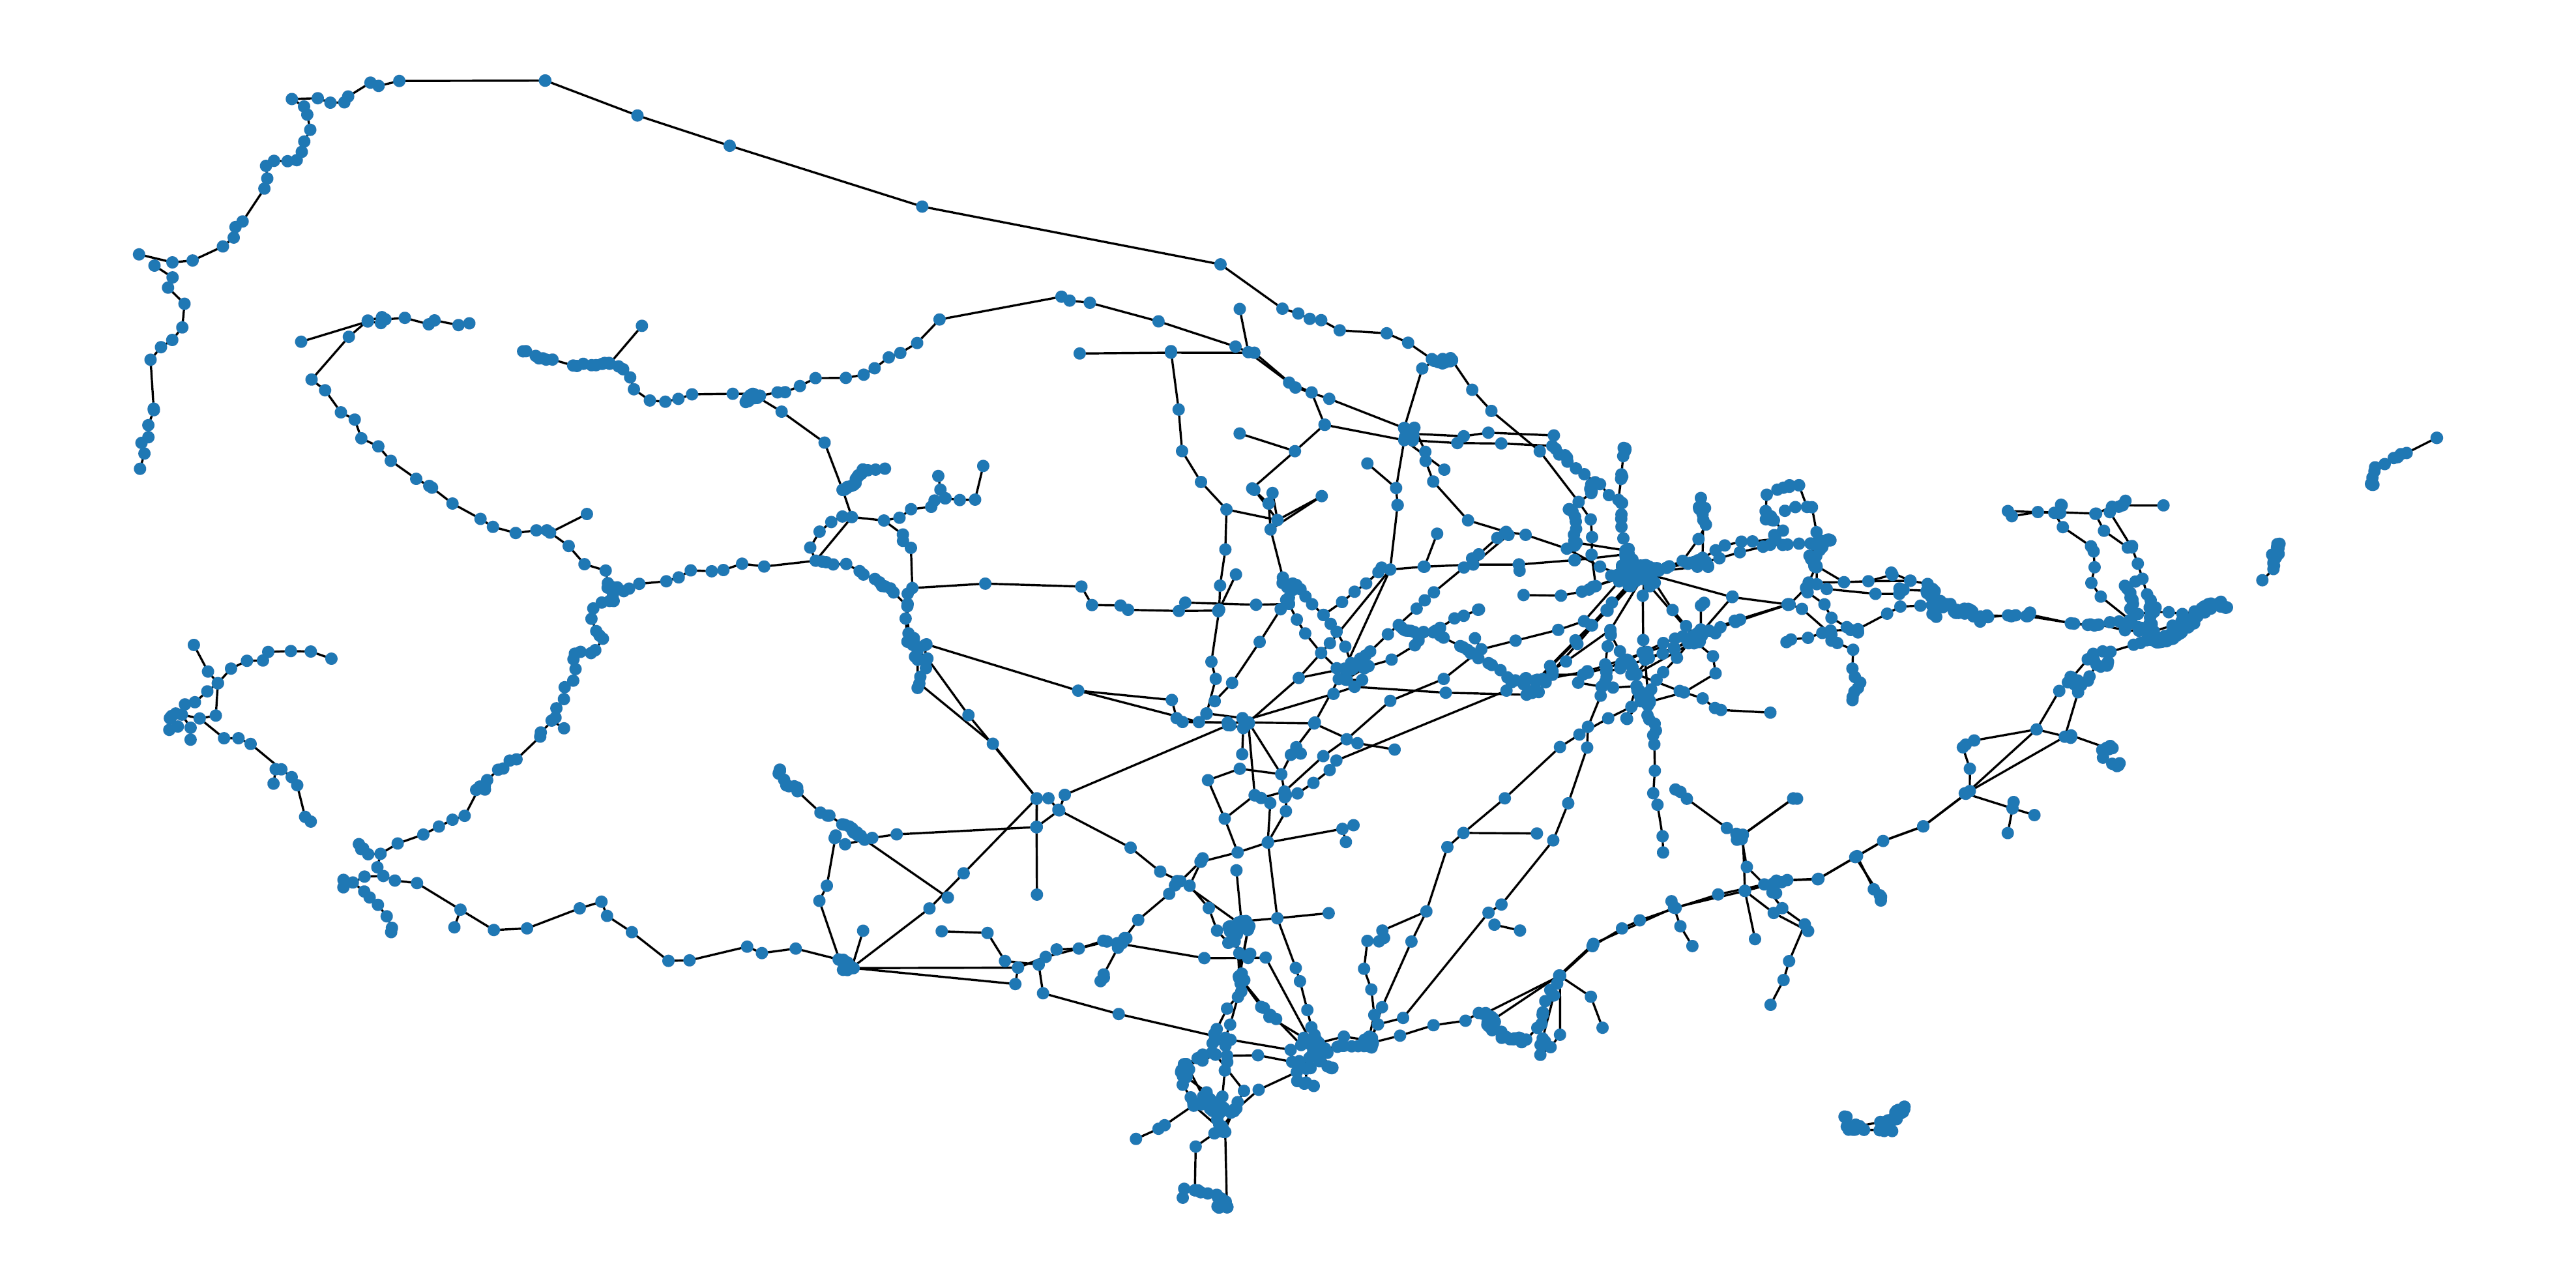 Petroleum product pipeline network of nodes and edges | Skanda Vivek